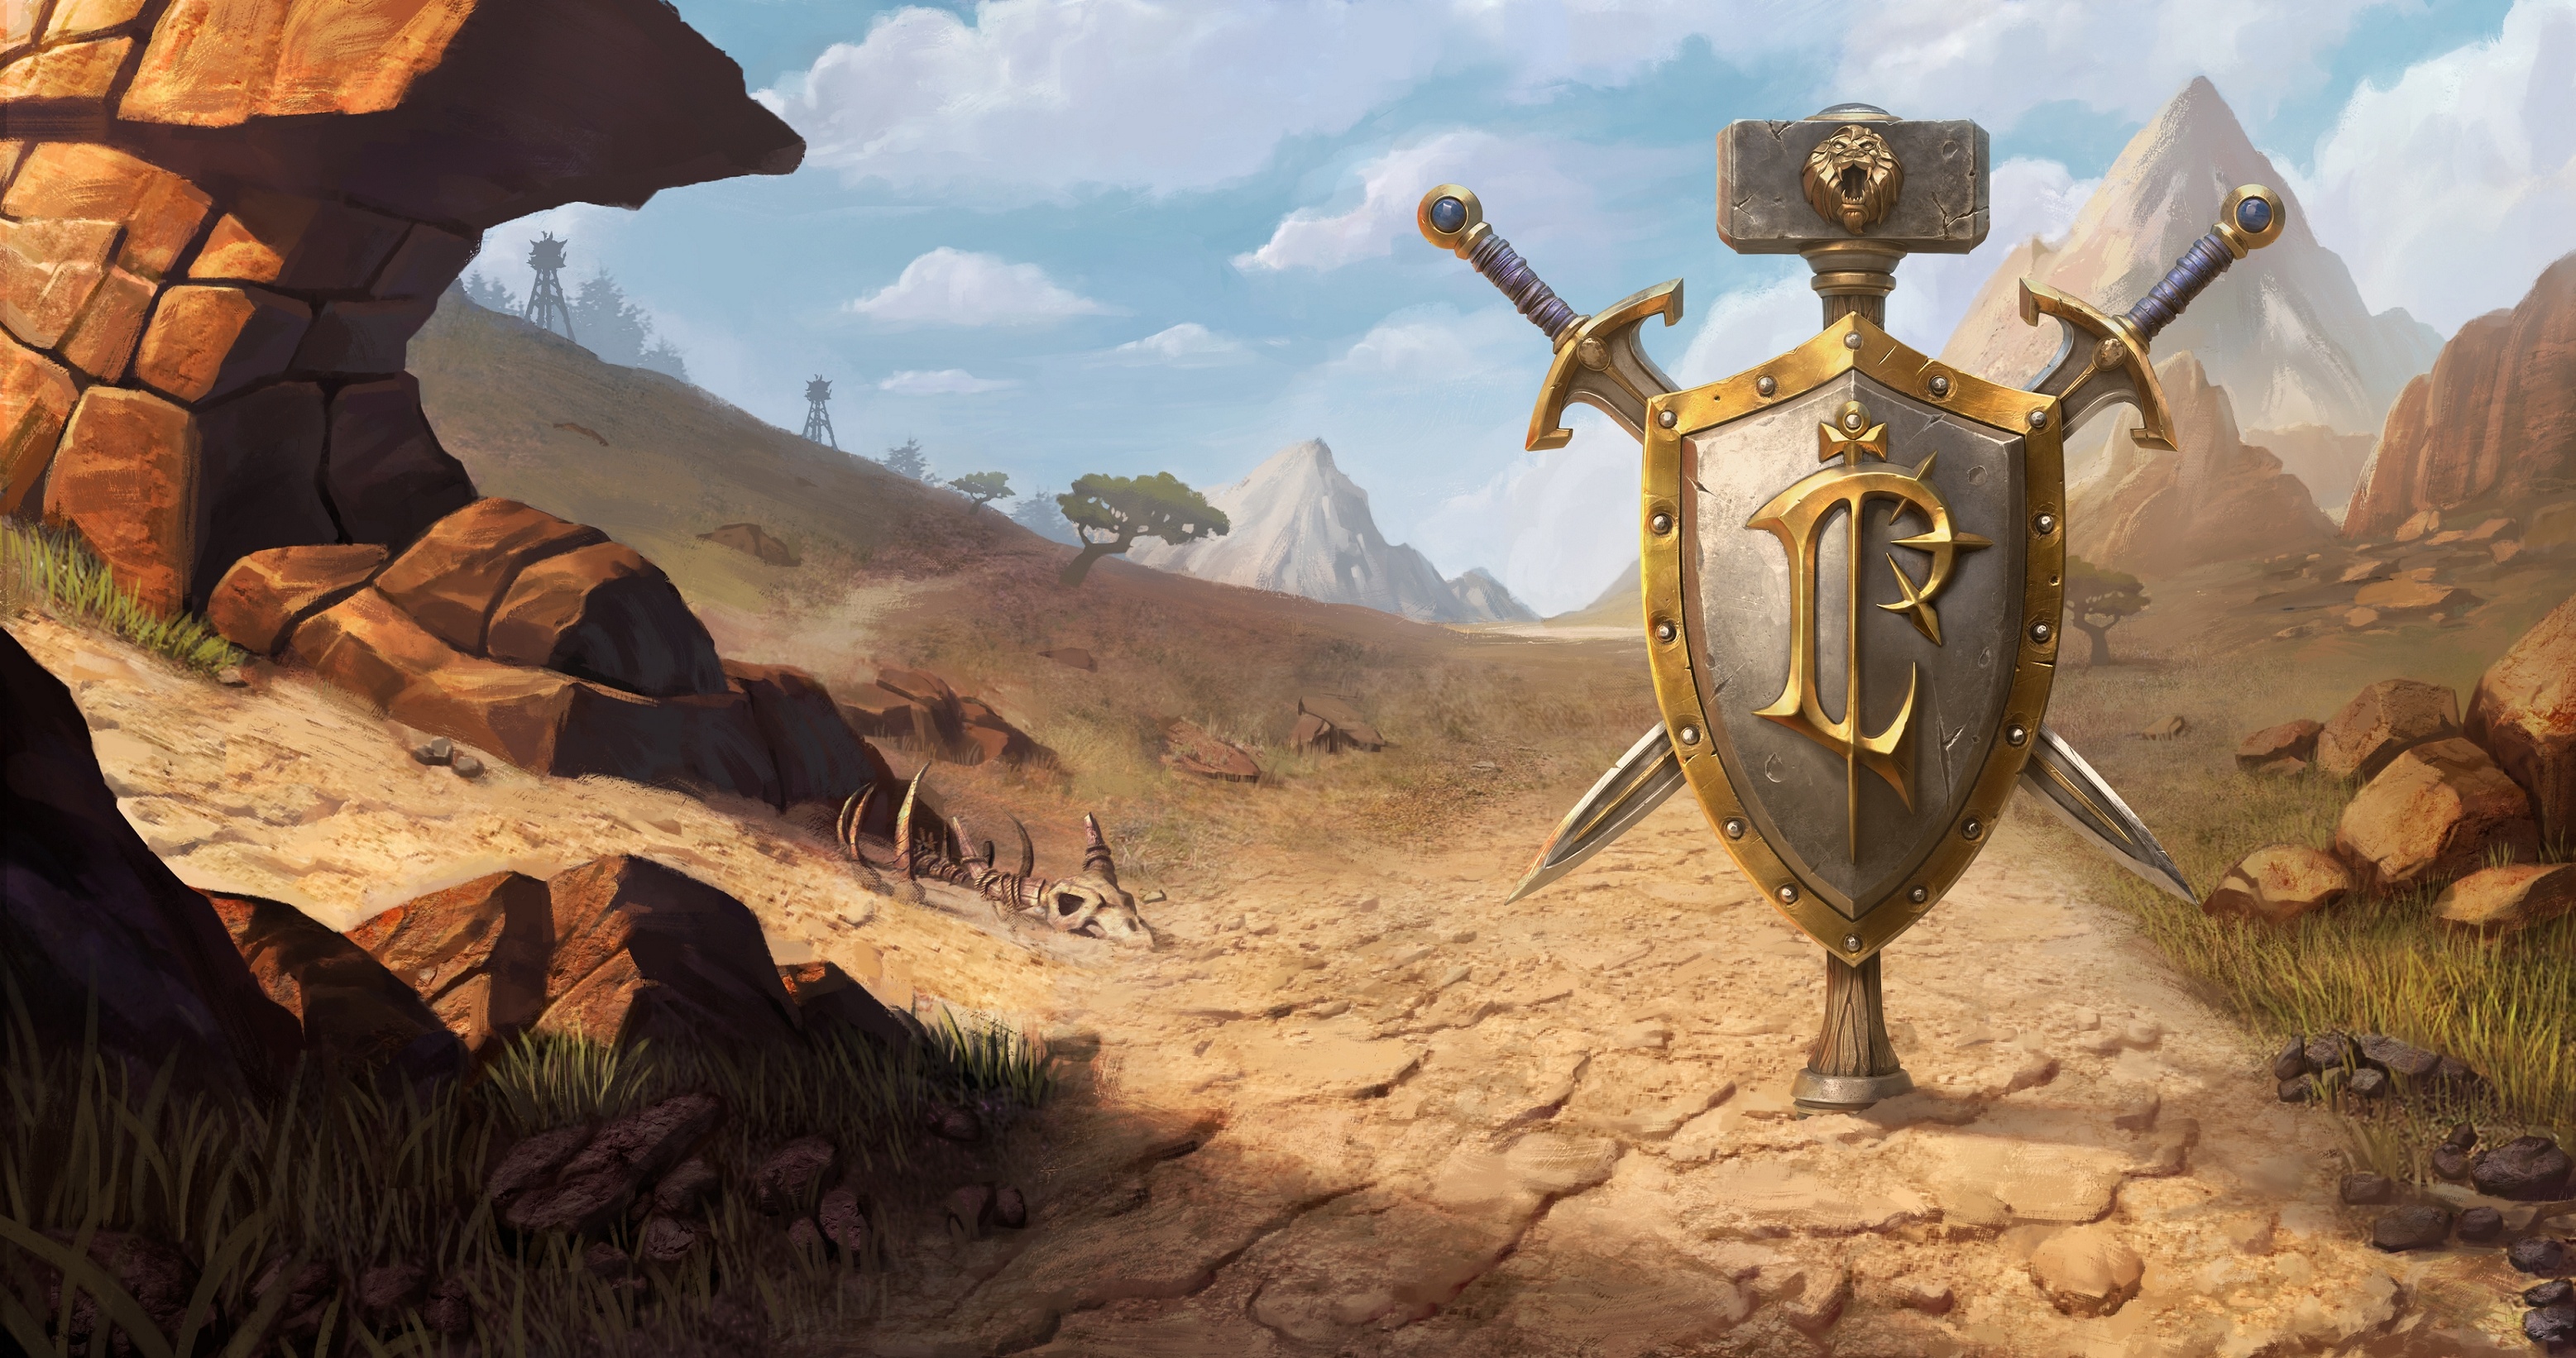 Warcraft III Reforged Art Assets Screens